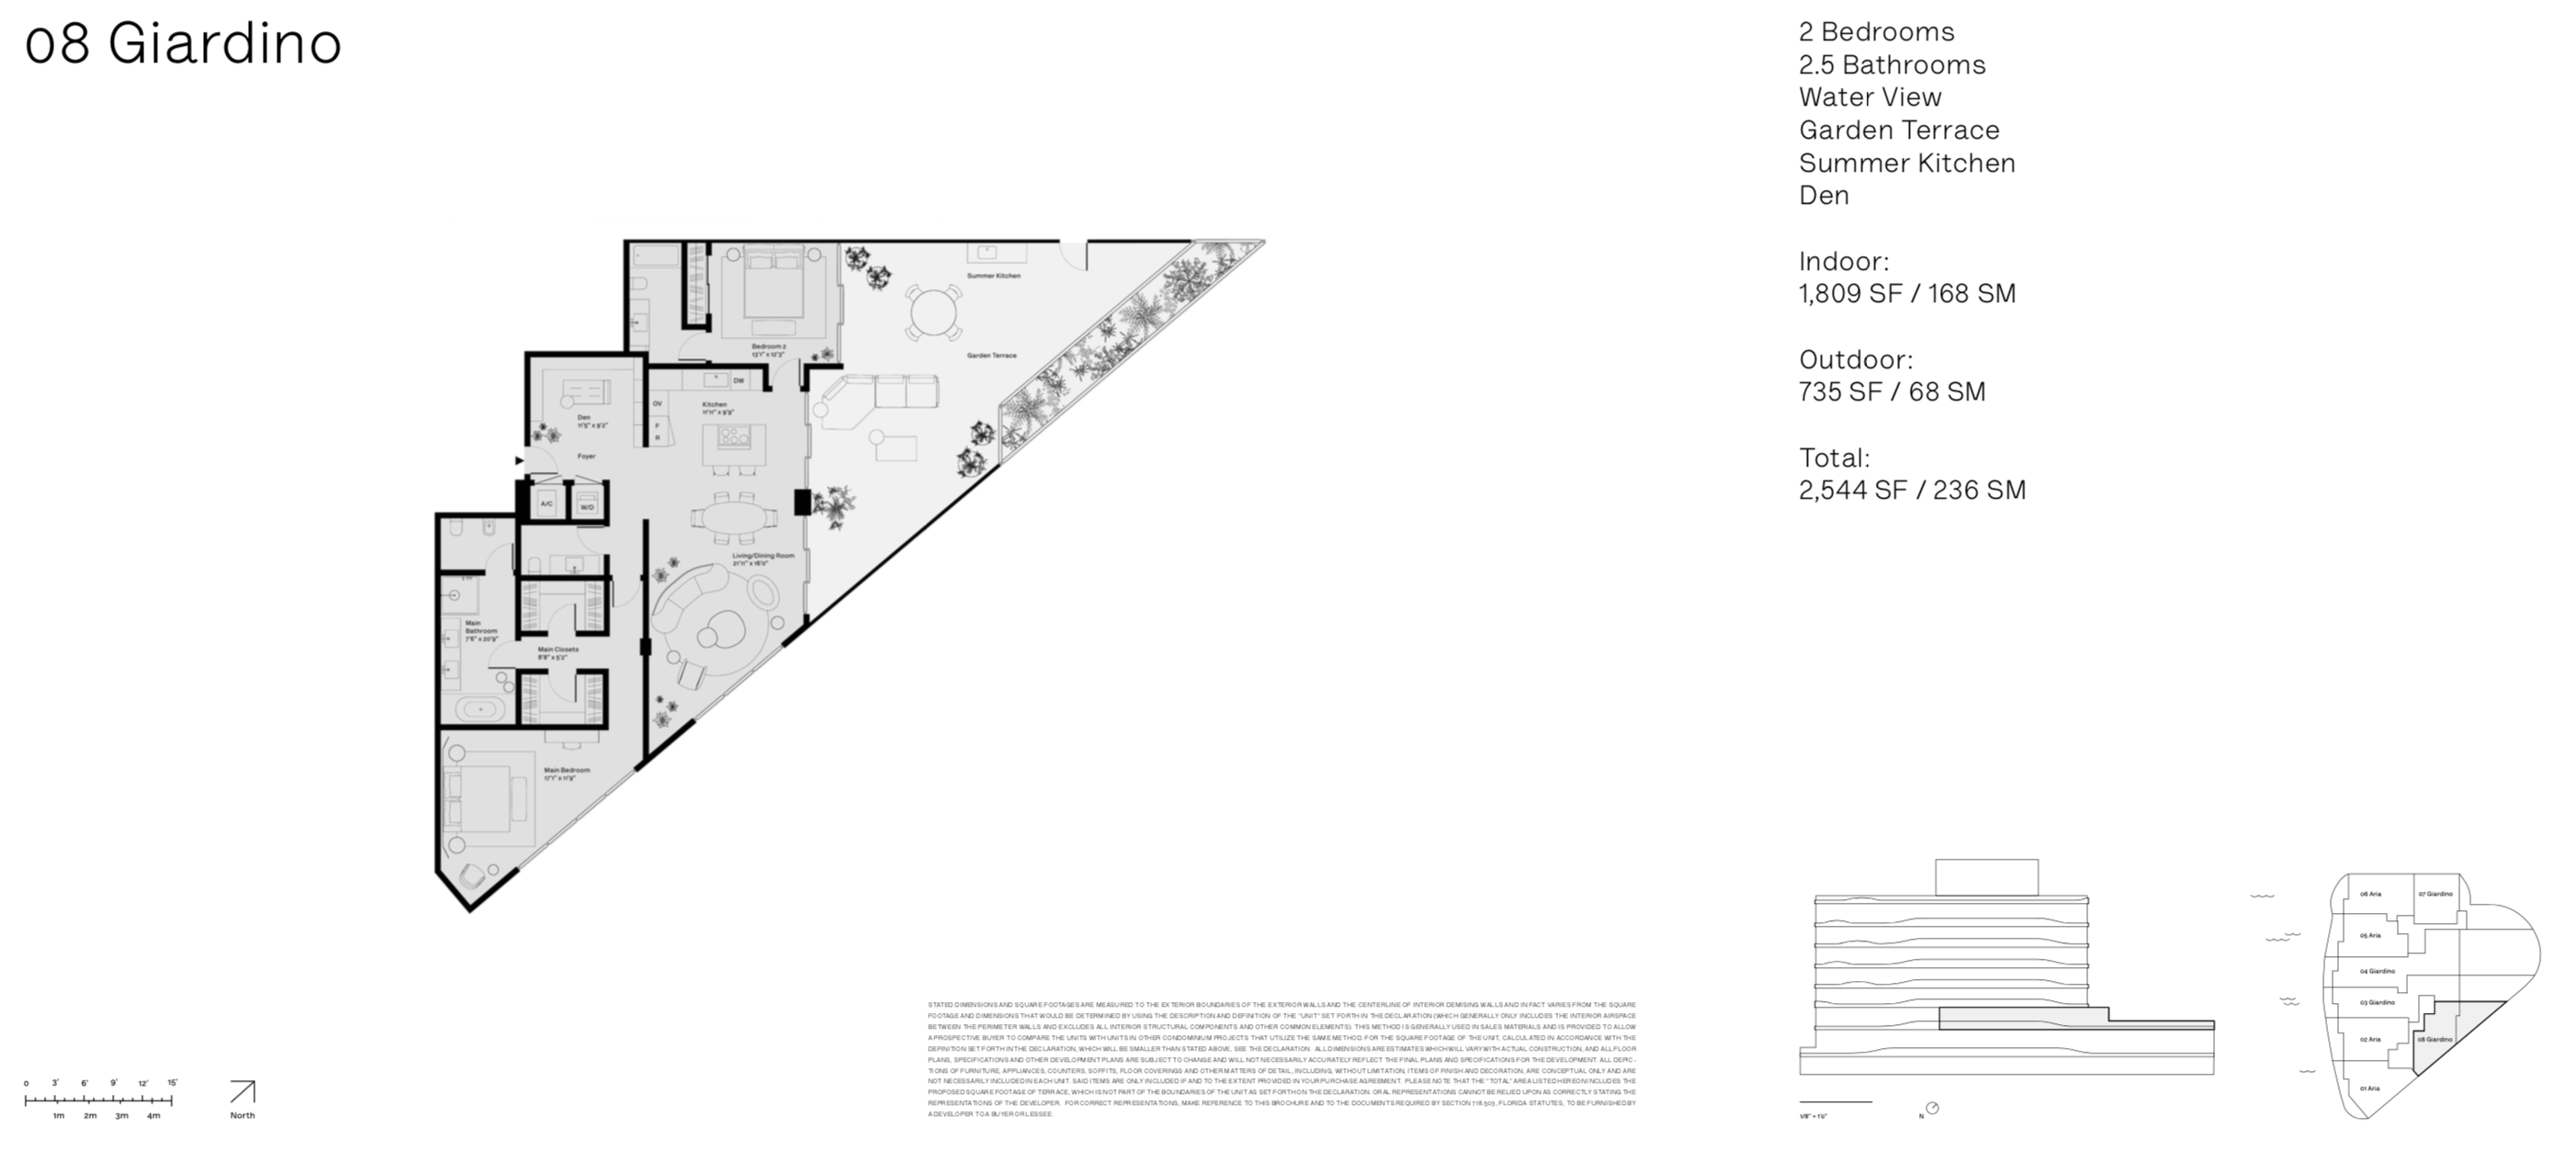 Onda Residences | Giardino 08 Line |  Floor 3 | 2 Be + den | 2.5 Ba | Waterviews | 1,809 SF | Garden Terrace  | Summer Kitchen